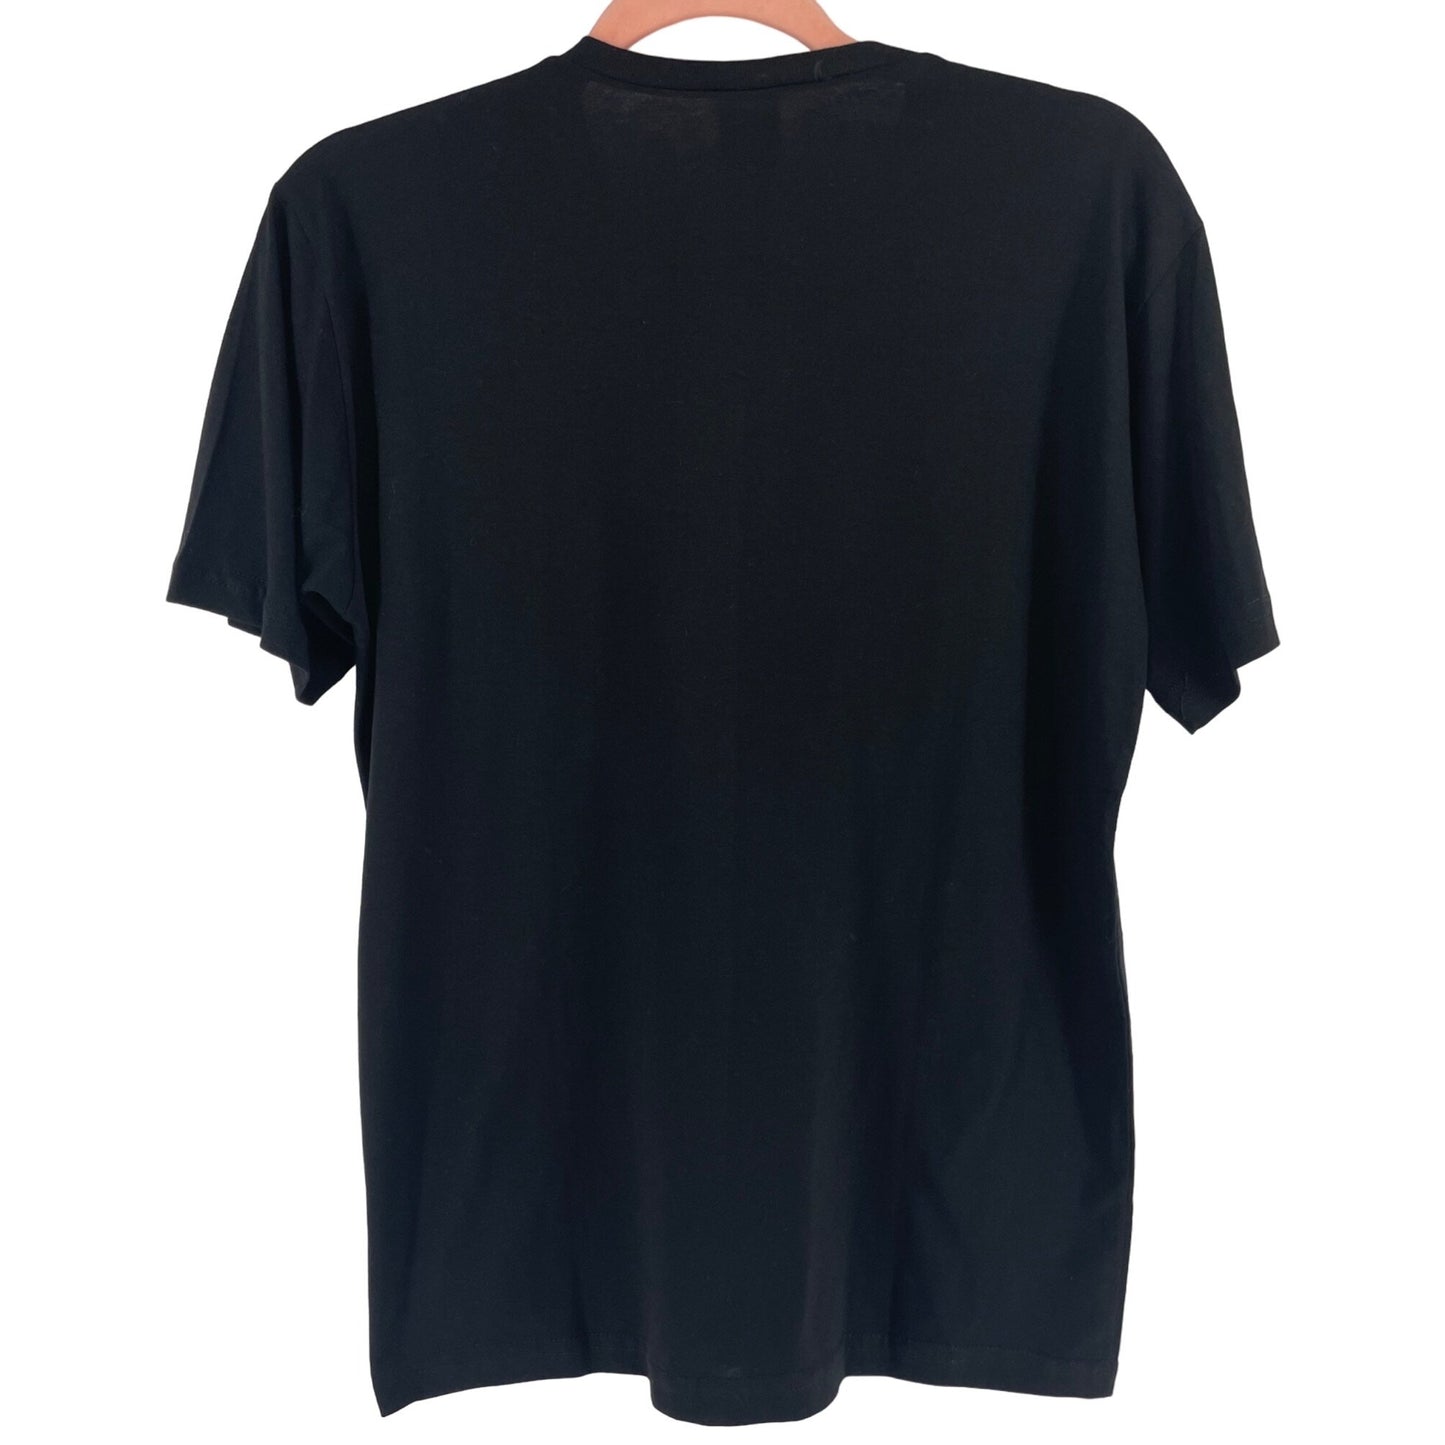 Porto Blue Men's Size Medium Black/Gold Ephesians 6:11 Graphic Shirt in Spanish